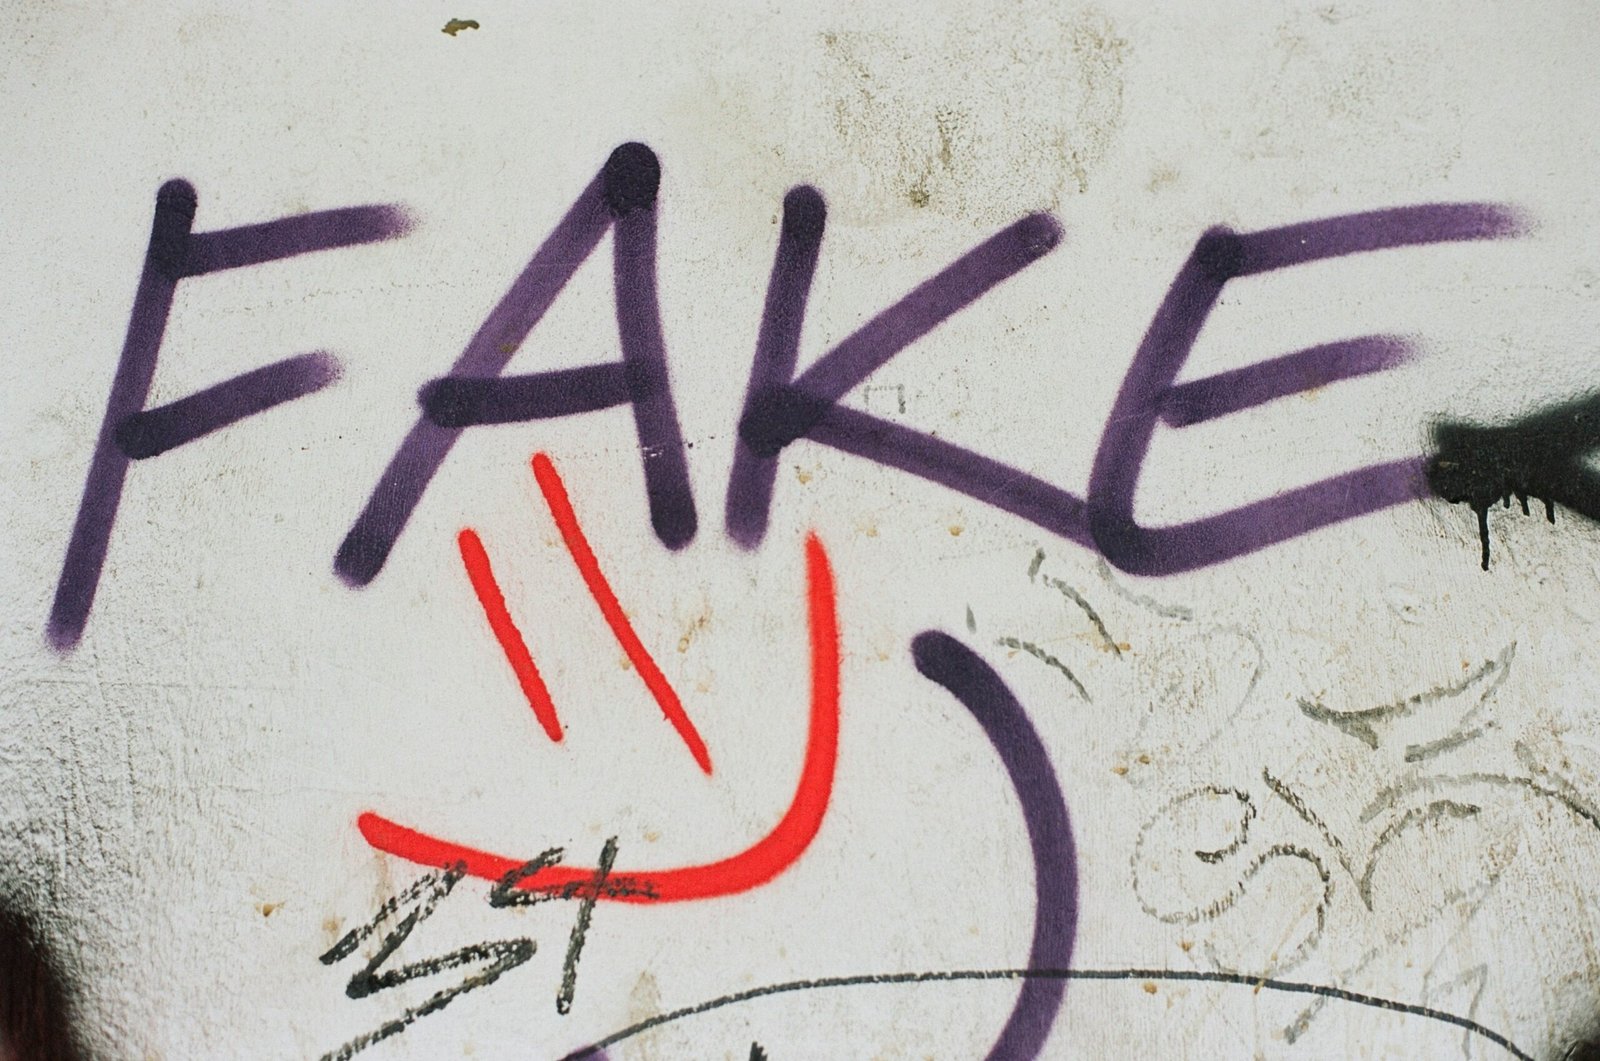 graffiti on a wall that says fake